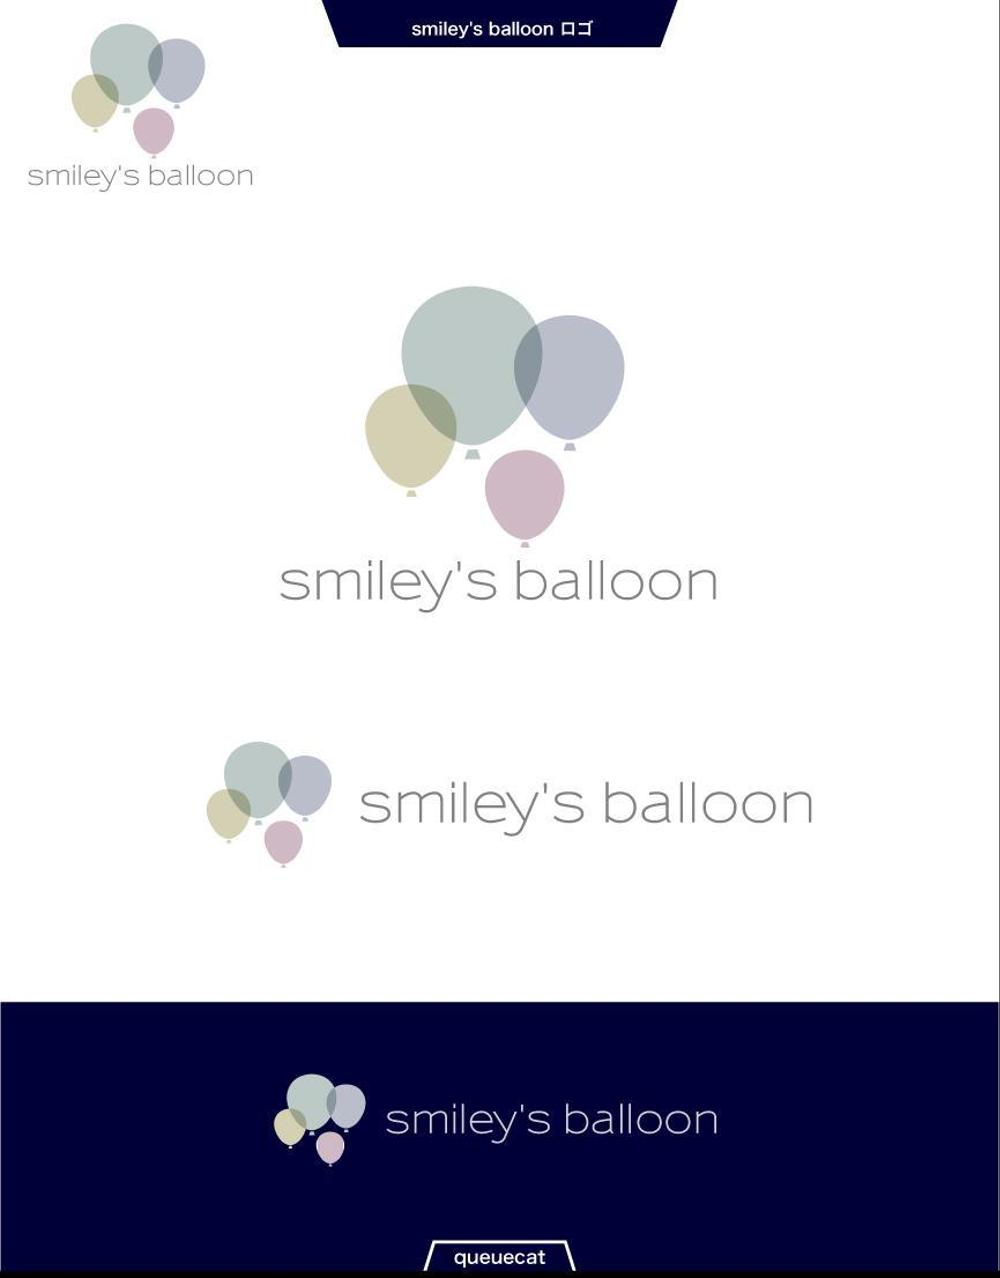 smiley's balloon1_1.jpg